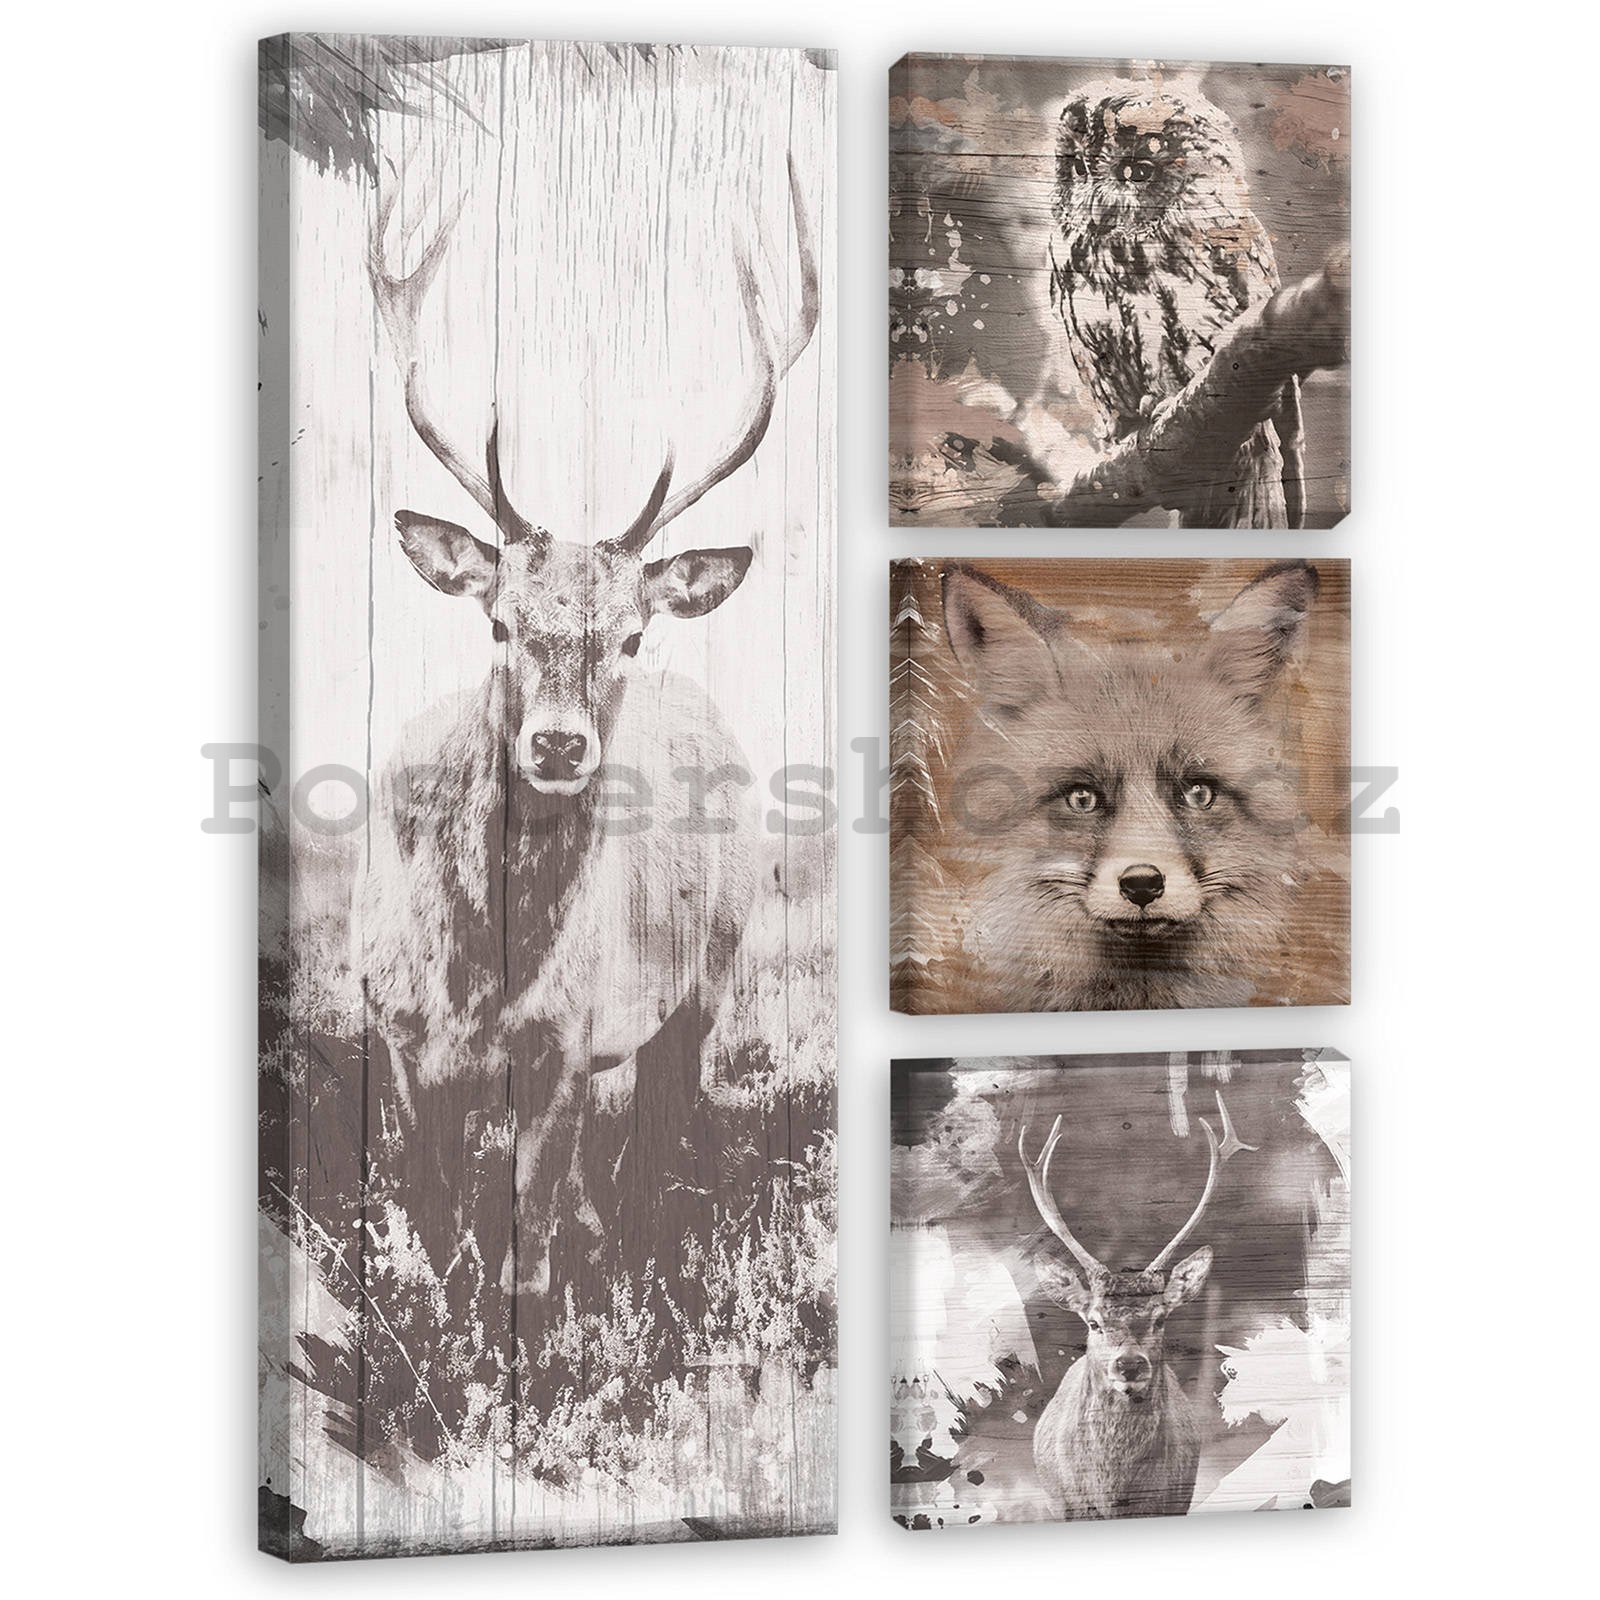 Obraz na plátně: Zvířata v lese - set 1ks 80x30 cm a 3ks 25,8x24,8 cm